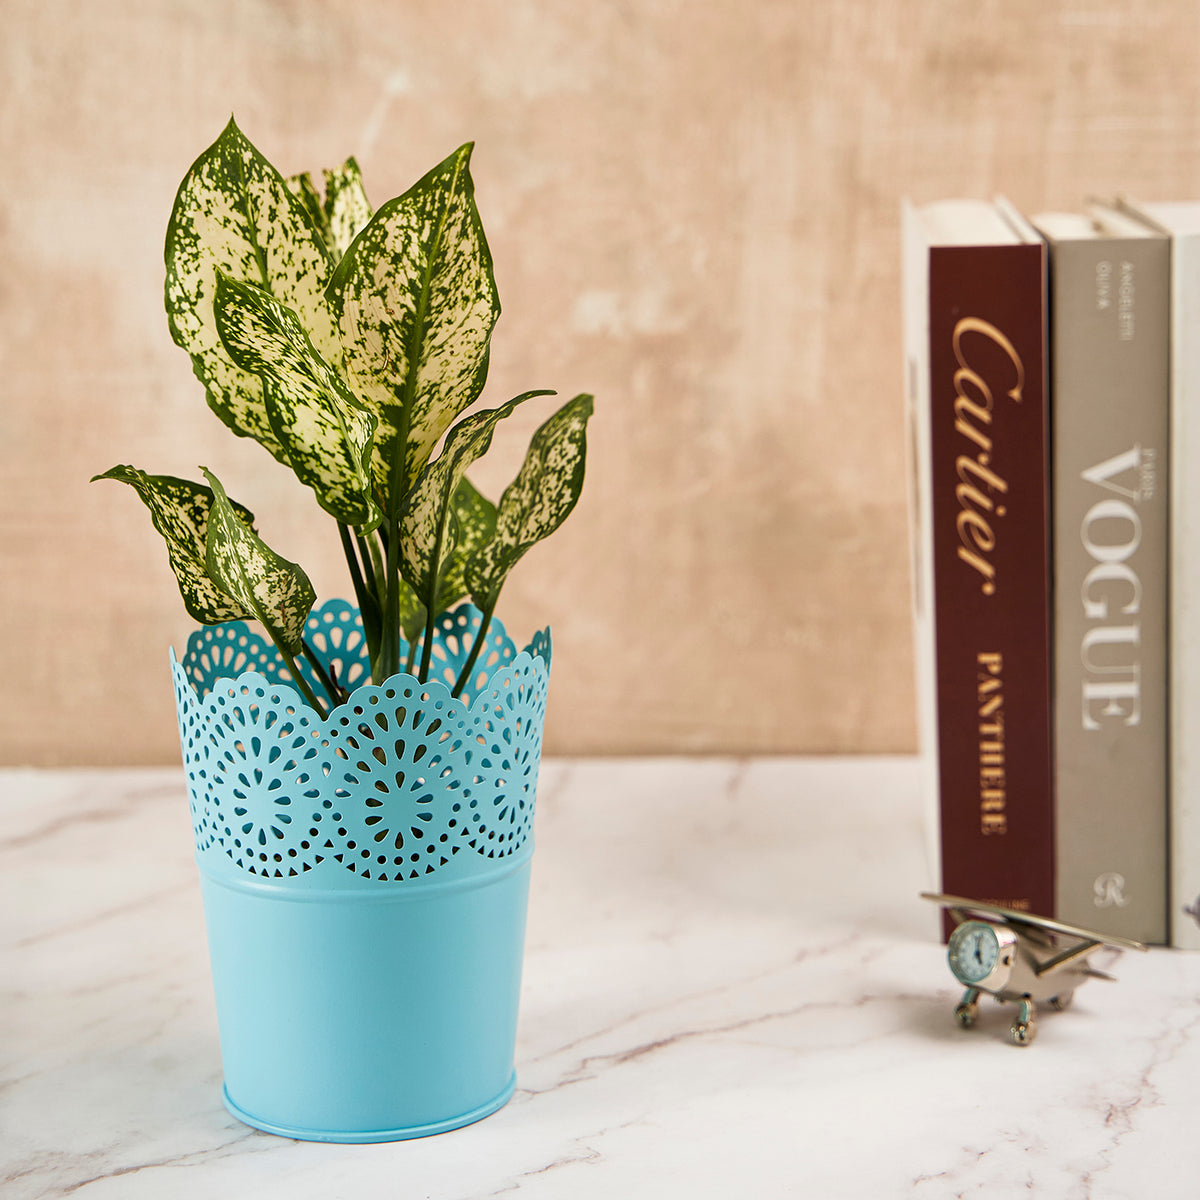 Metal Planter Flower Pot For Home Garden Office Desktop